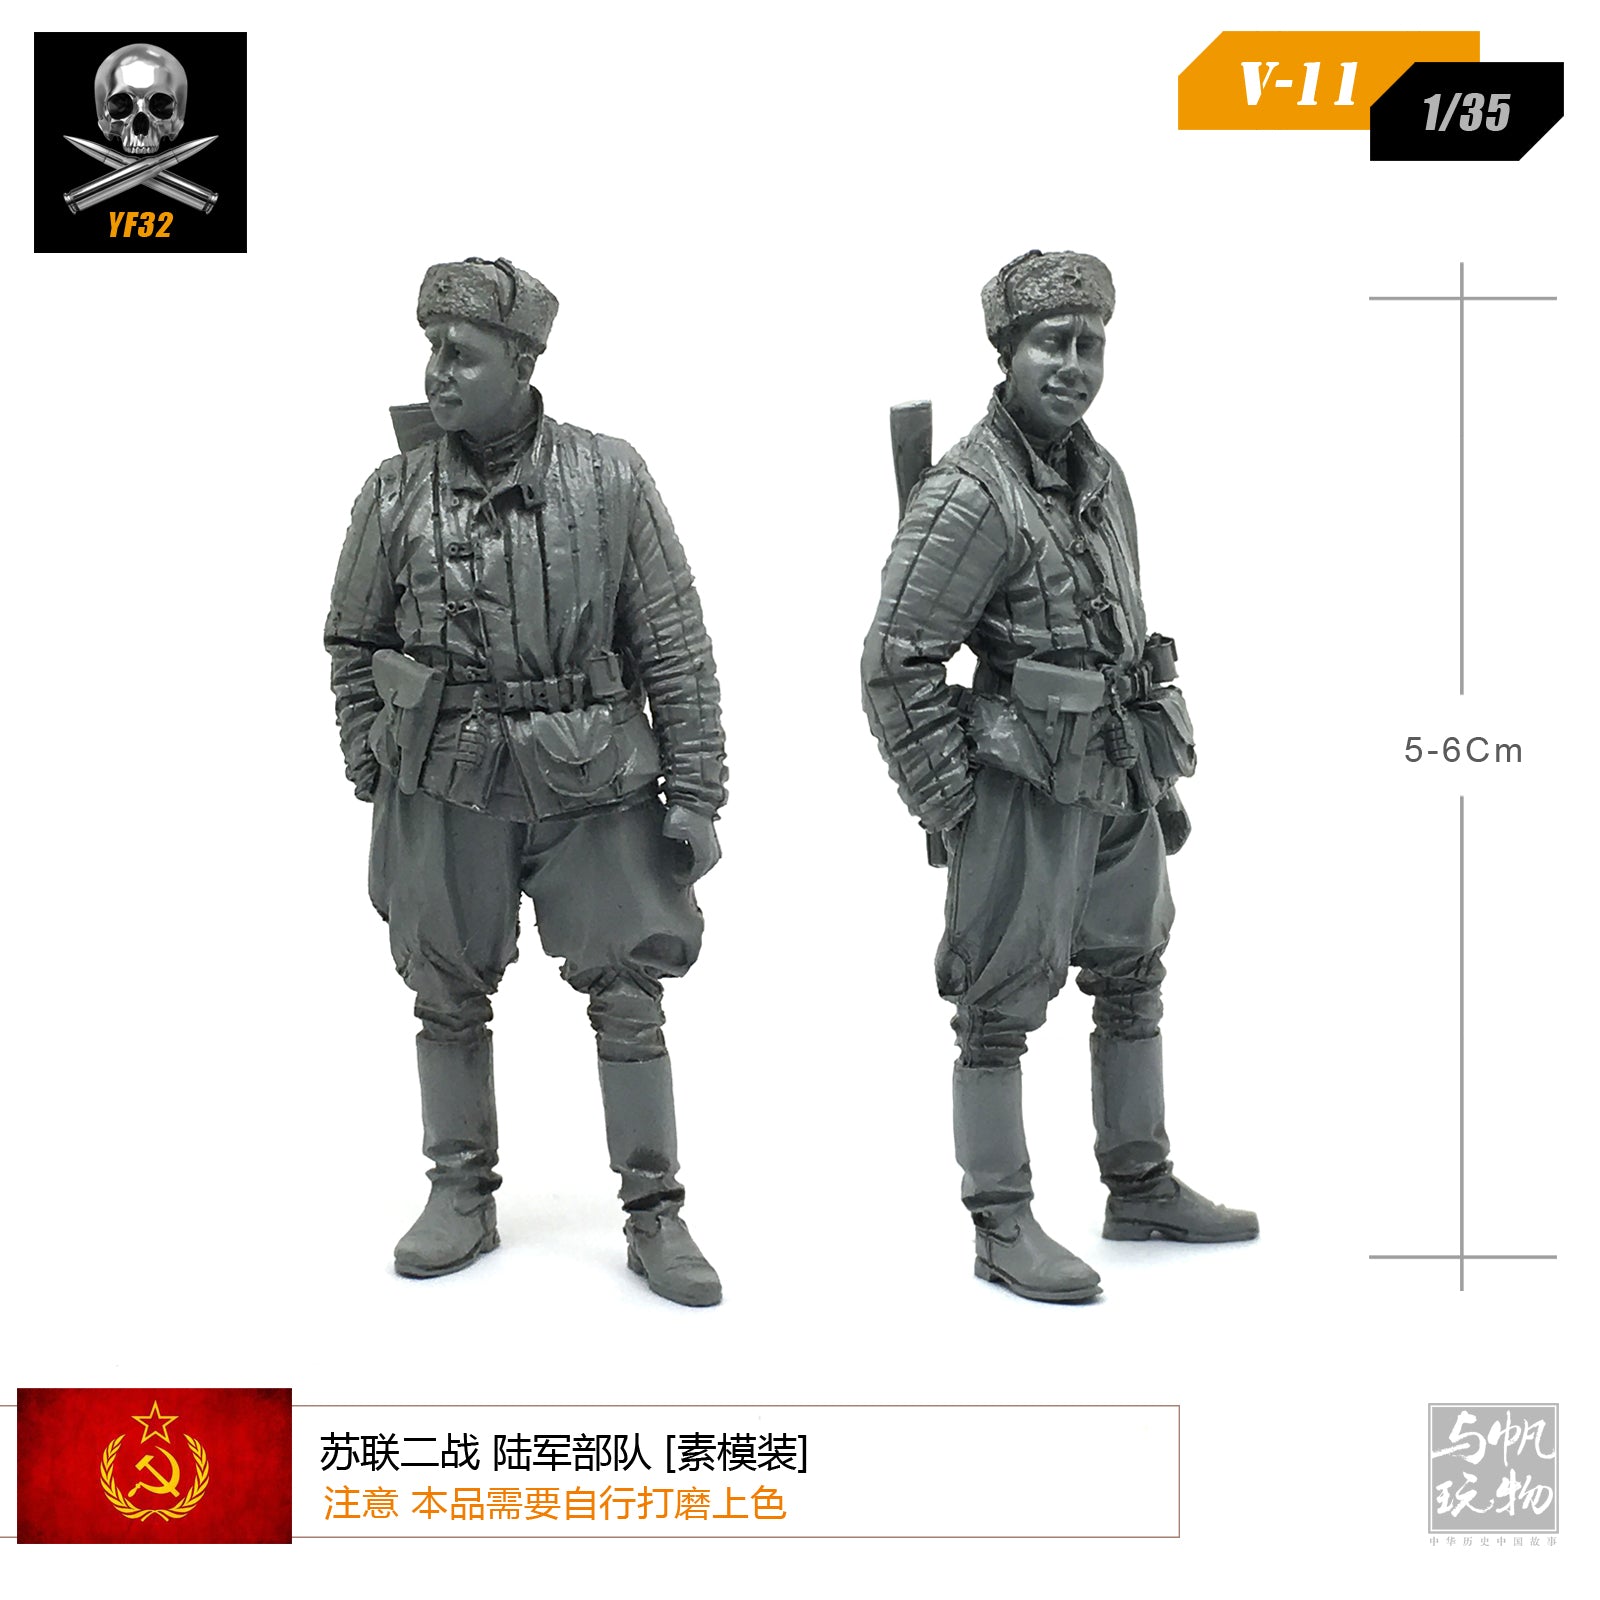 1/35 Soviet Union World War II Army troops soldiers resin model [plain mold super fine] V11